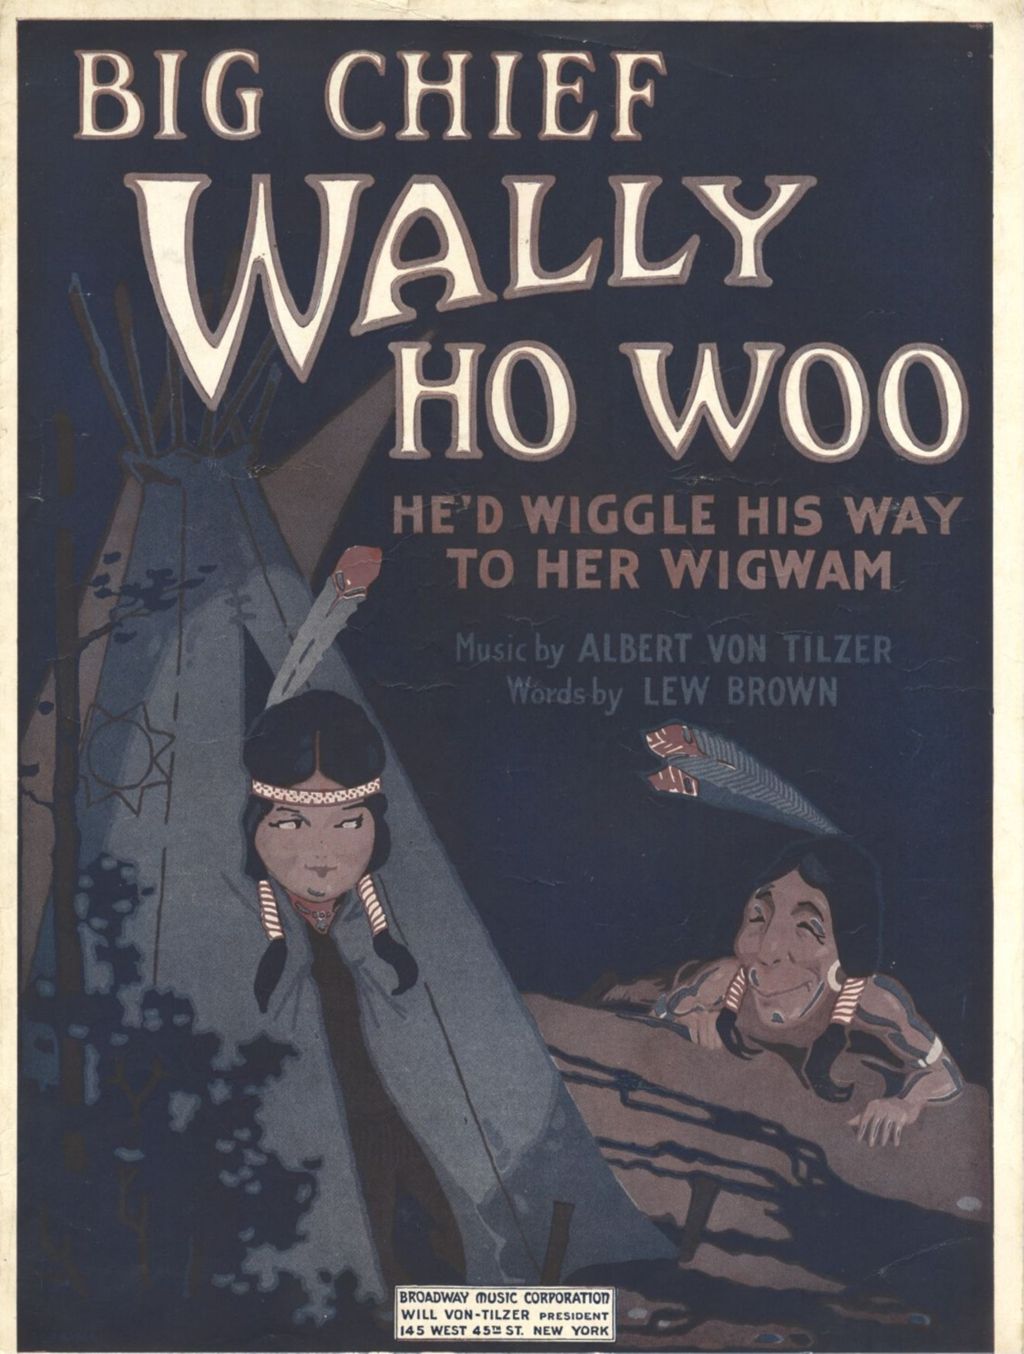 Big Chief Wally Ho Woo (He'd Wiggle His Way to Her Wigwam)